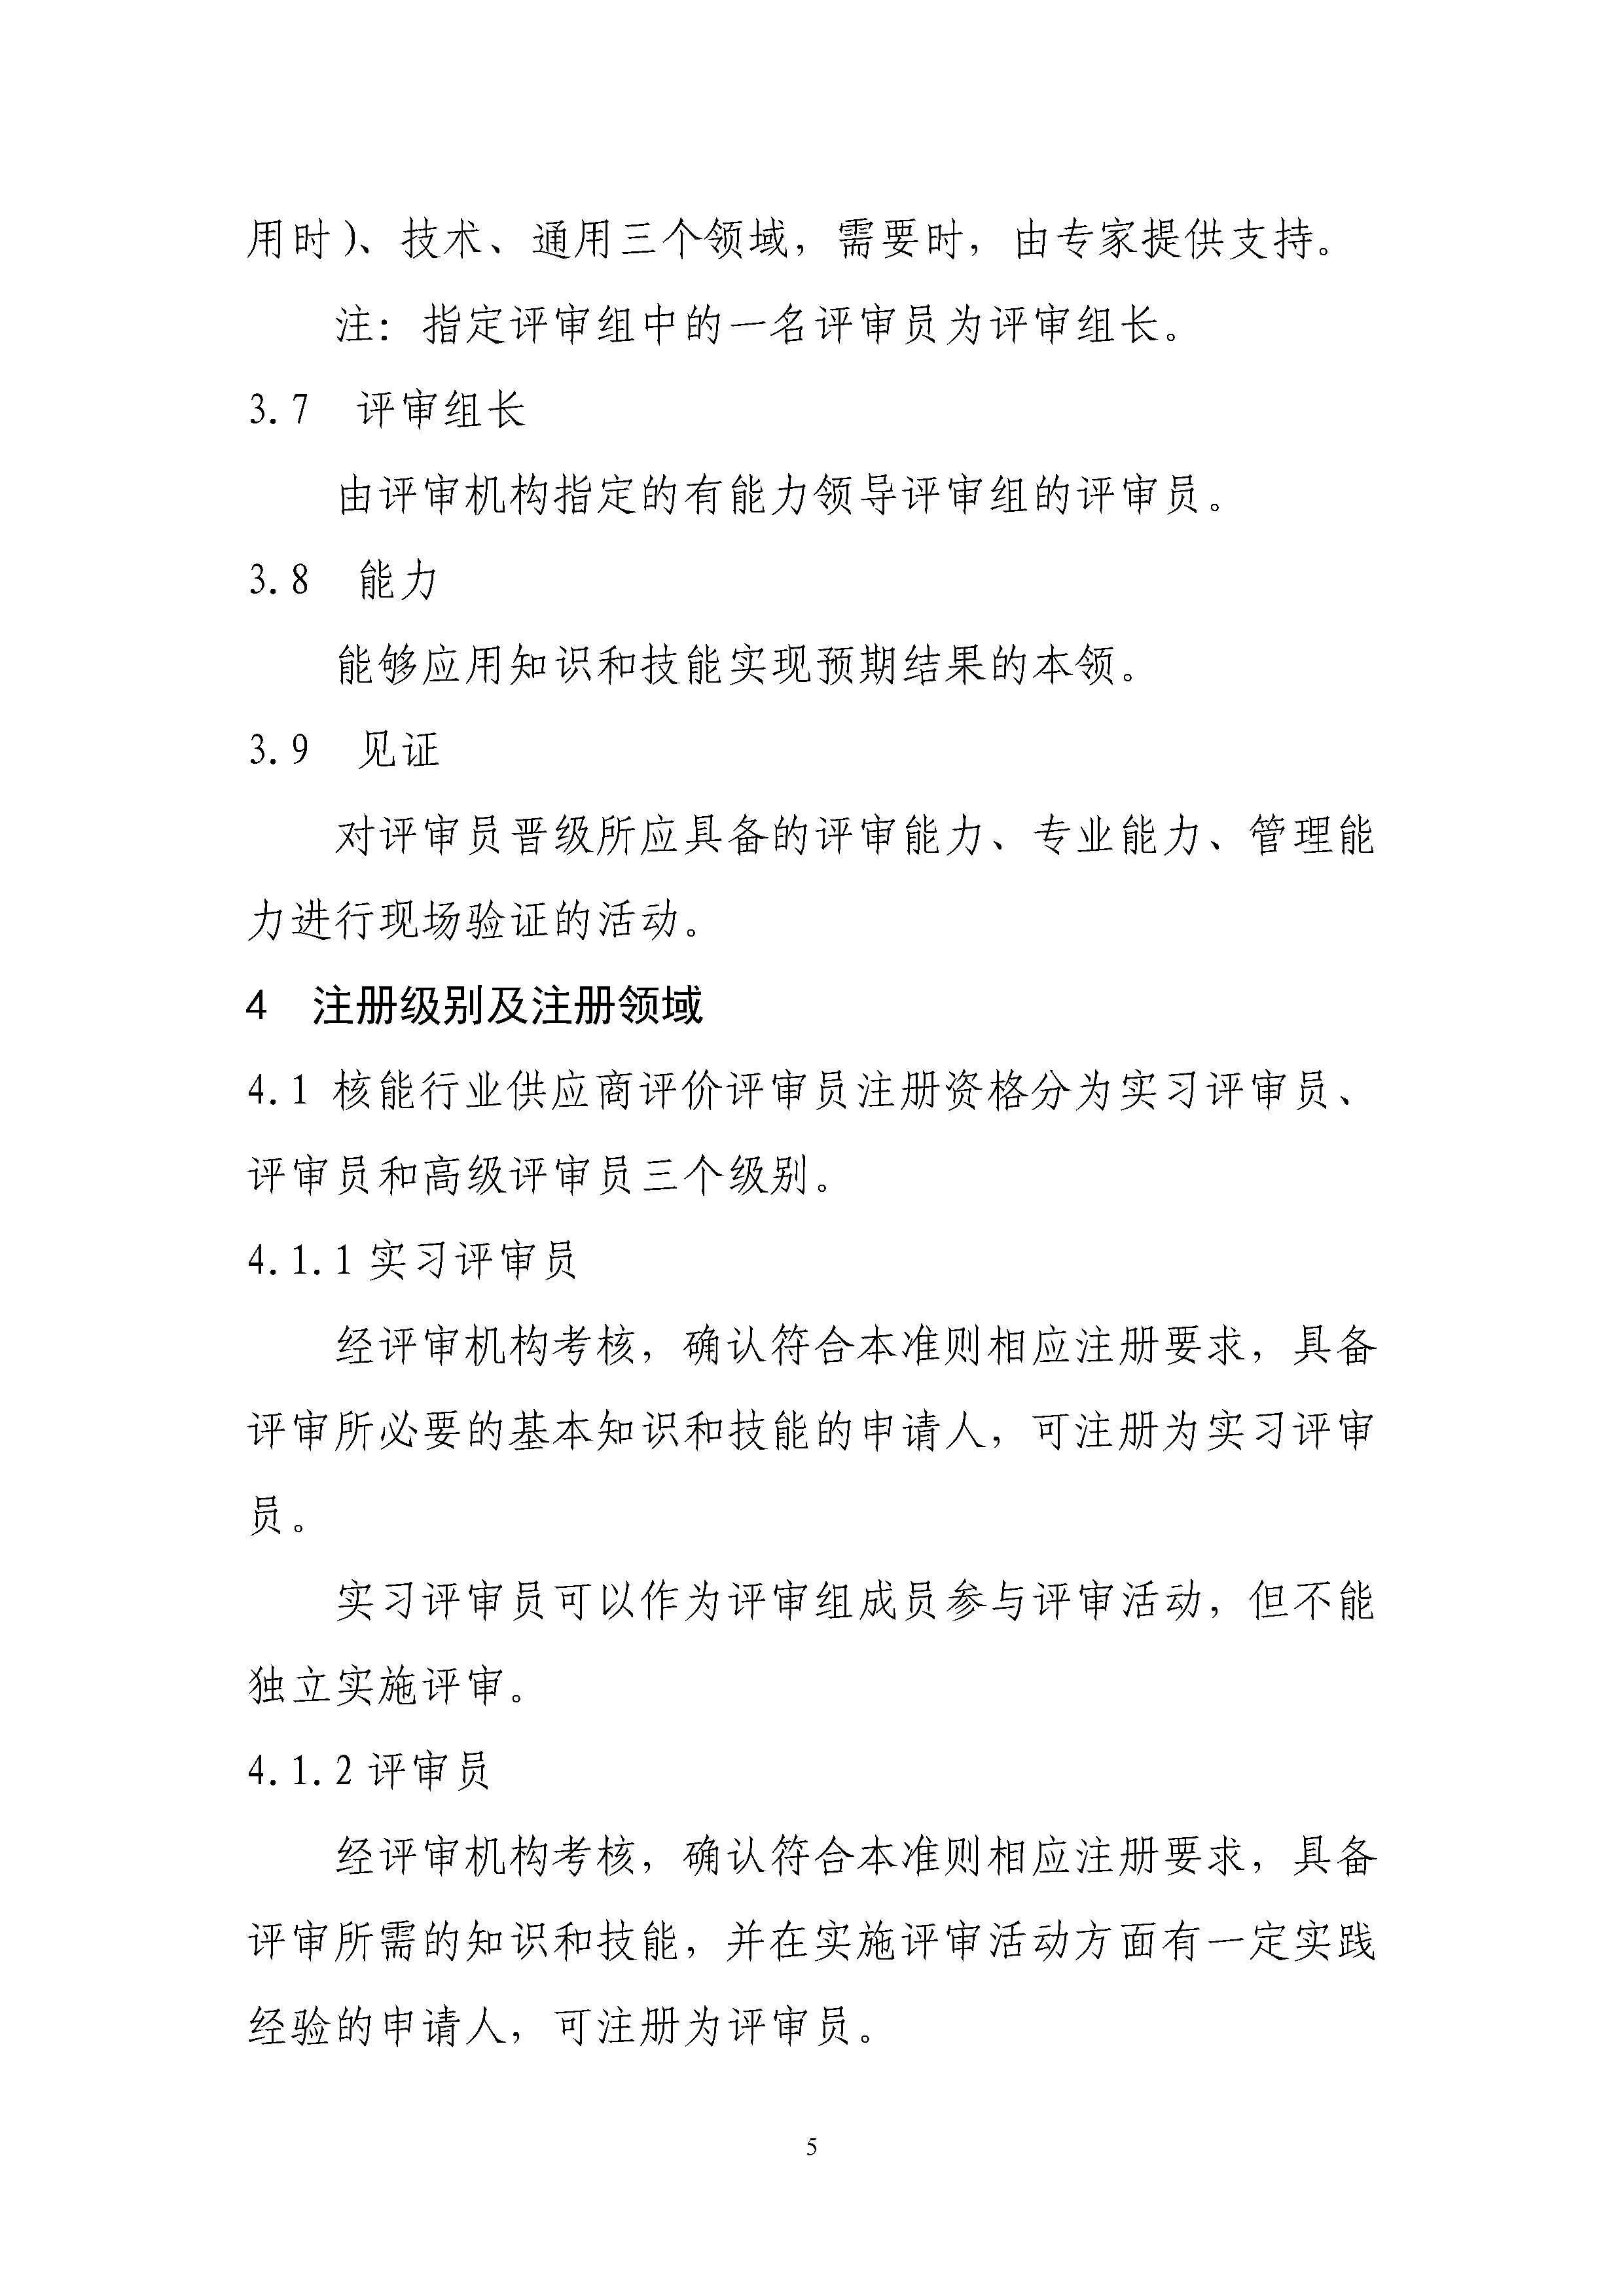 B.5《中国核能行业协会供应商评价评审员注册准则》_页面_06.png